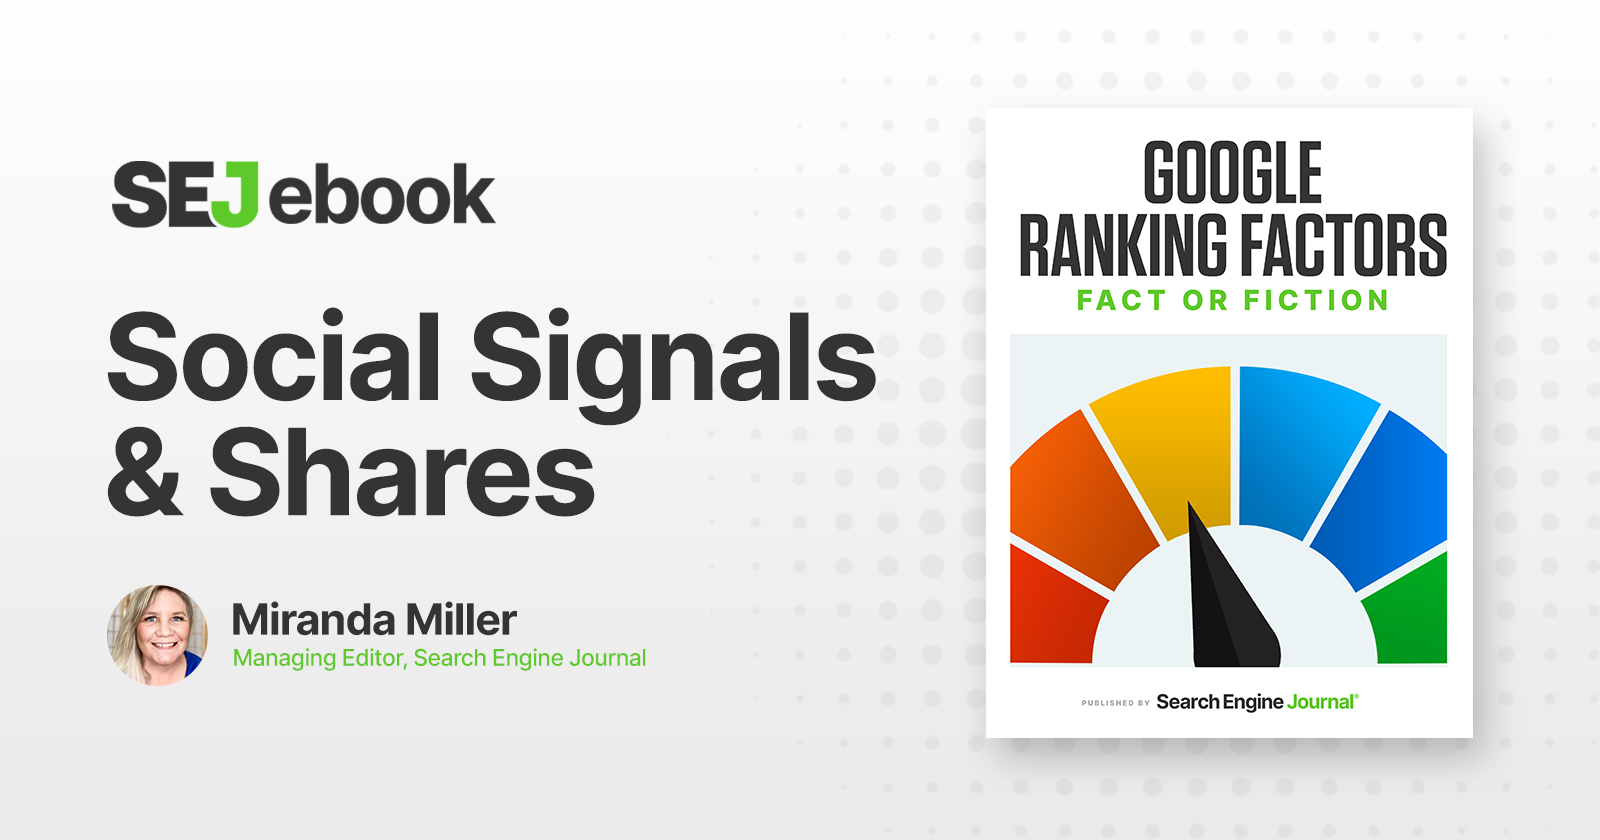 Are Social Signals A Google Ranking Factor? via @sejournal, @mirandalmwrites